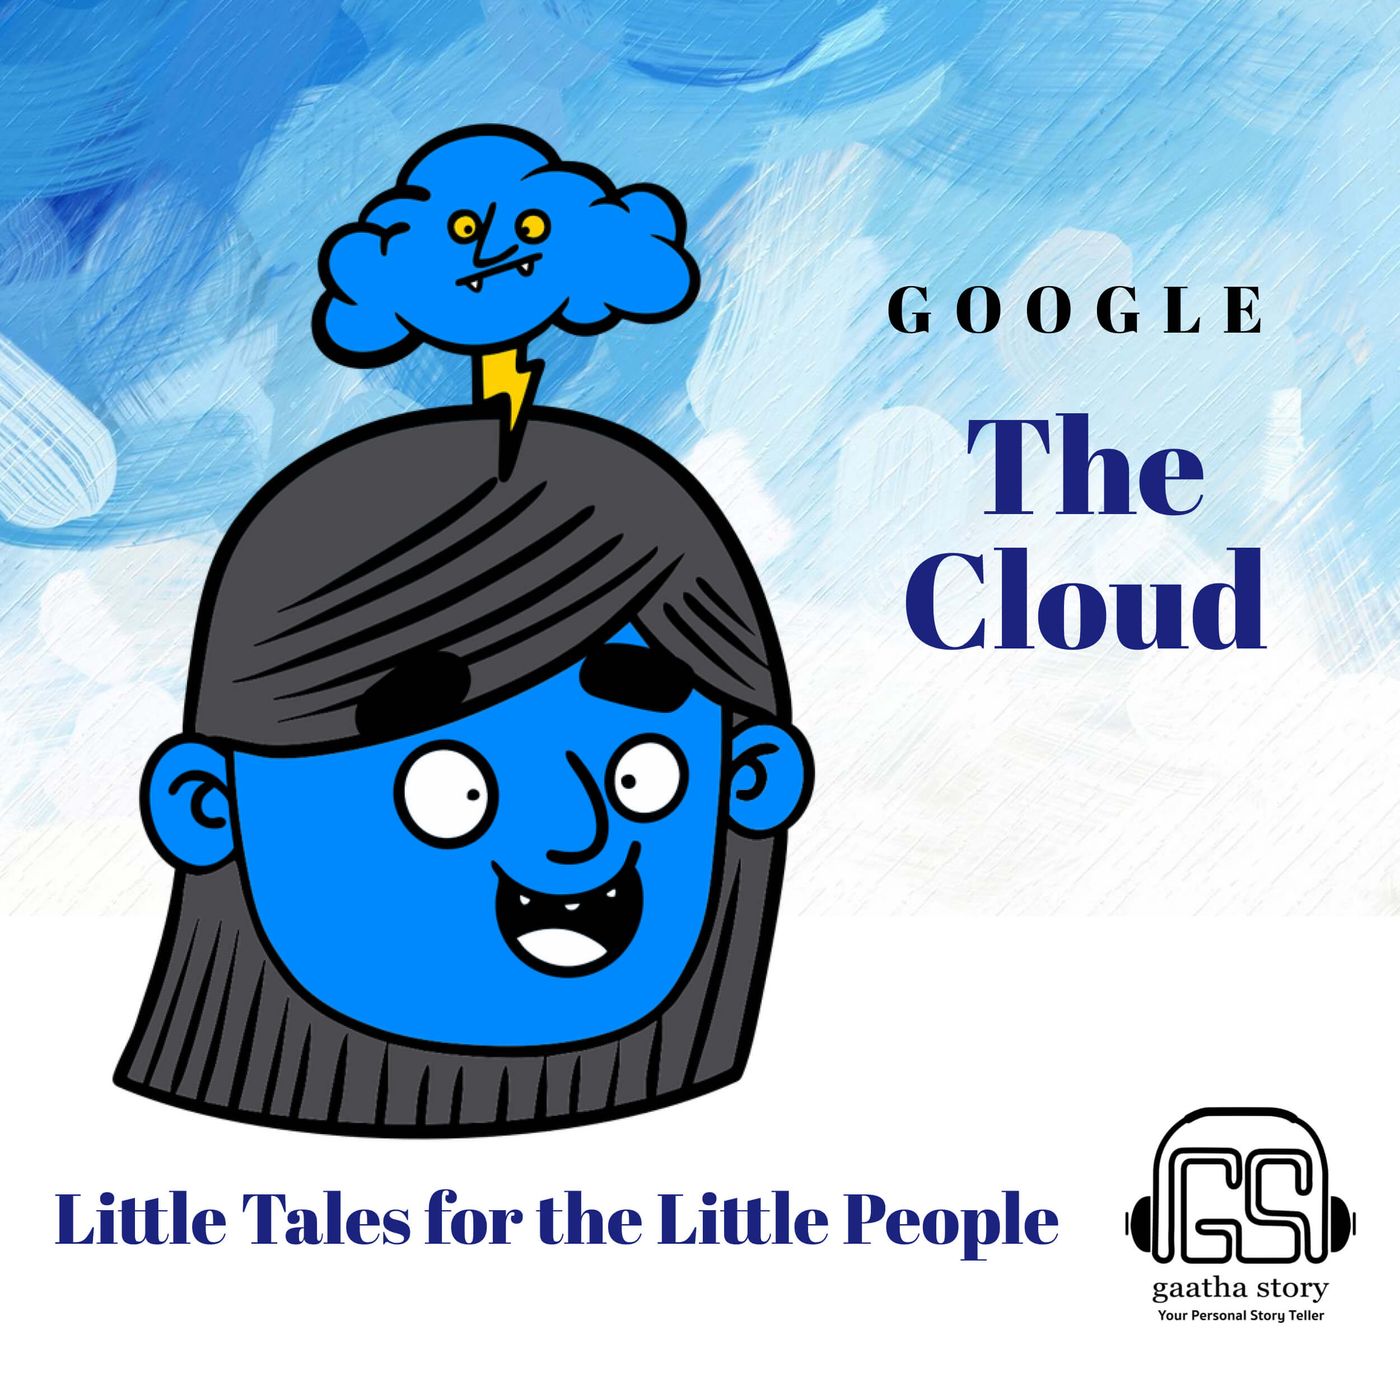 Google, The Cloud